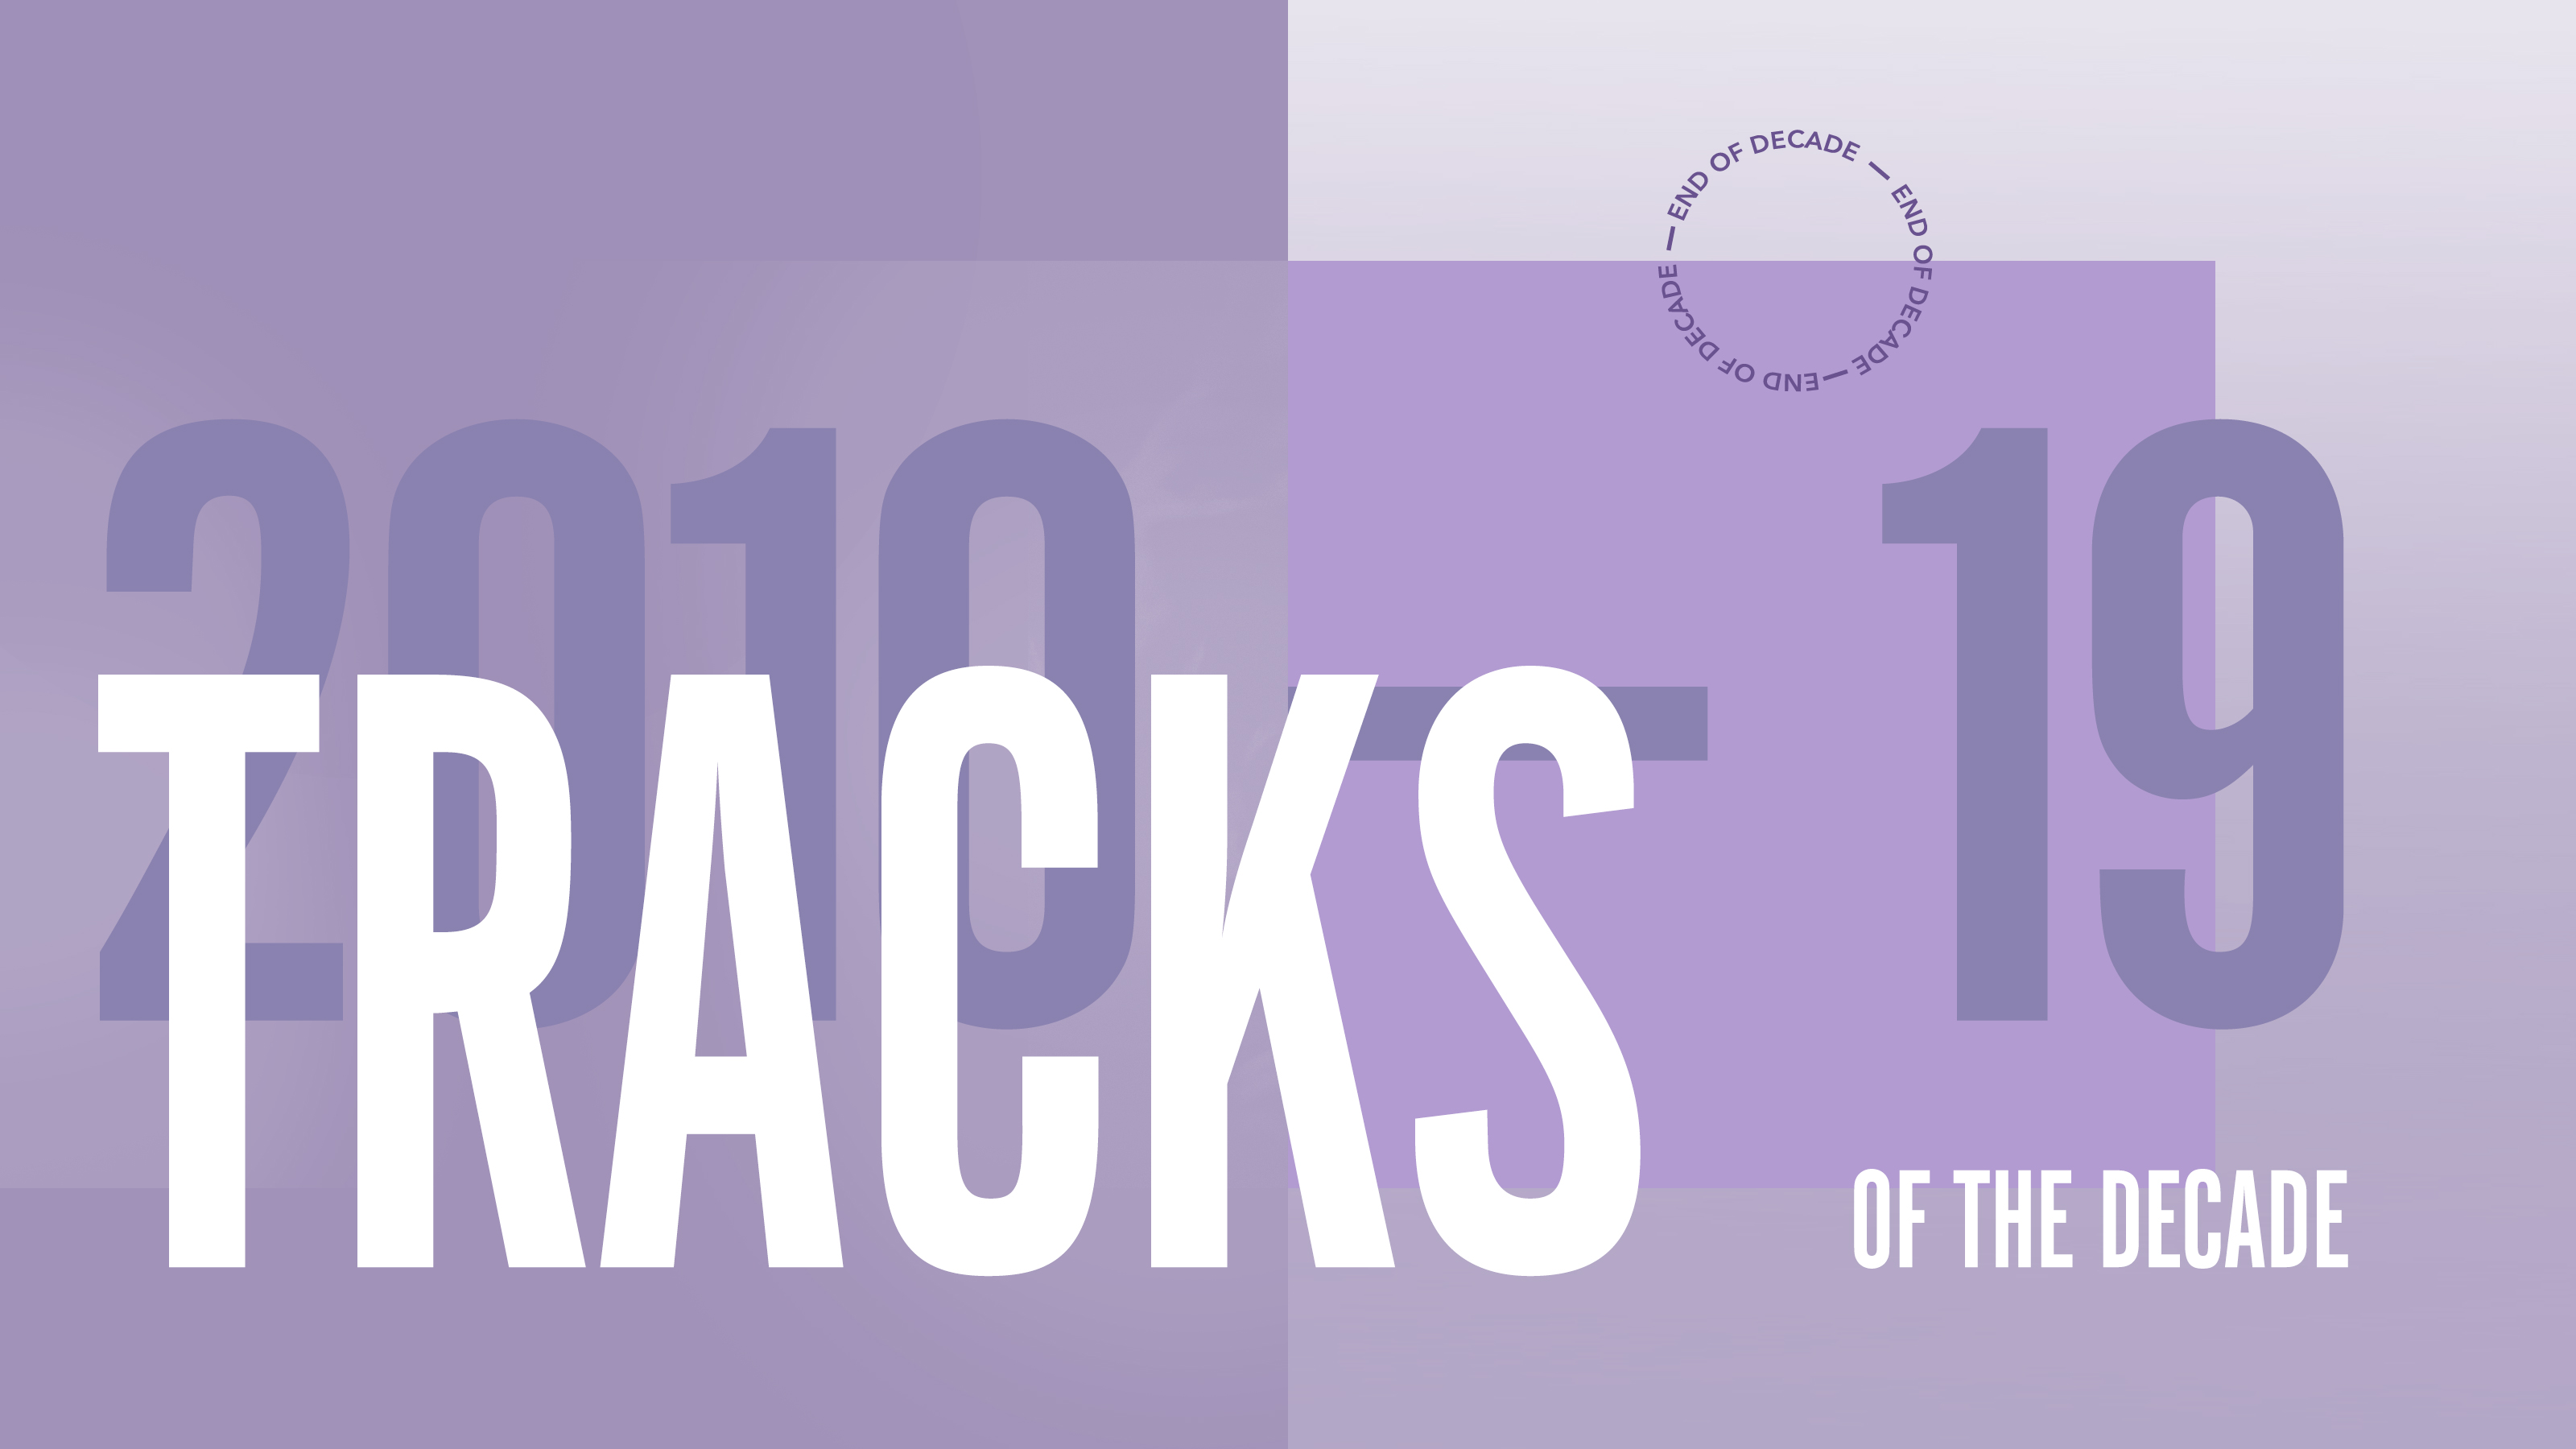 2010-19: Tracks Of The Decade